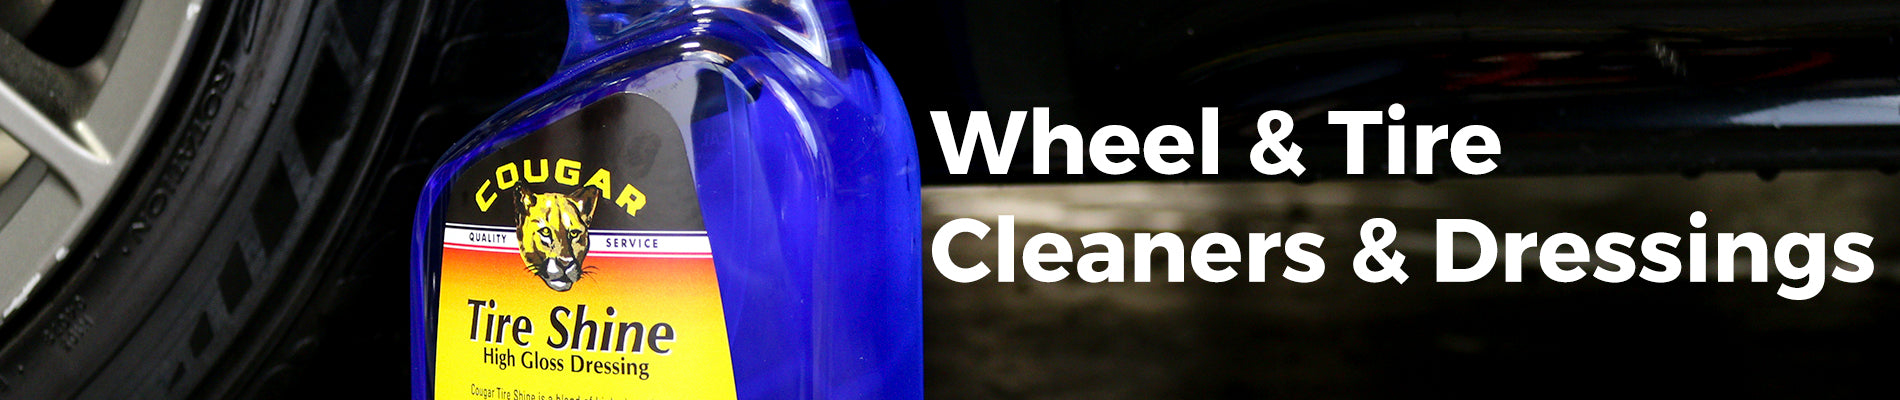 Wheel / Tire Cleaners & Dressings